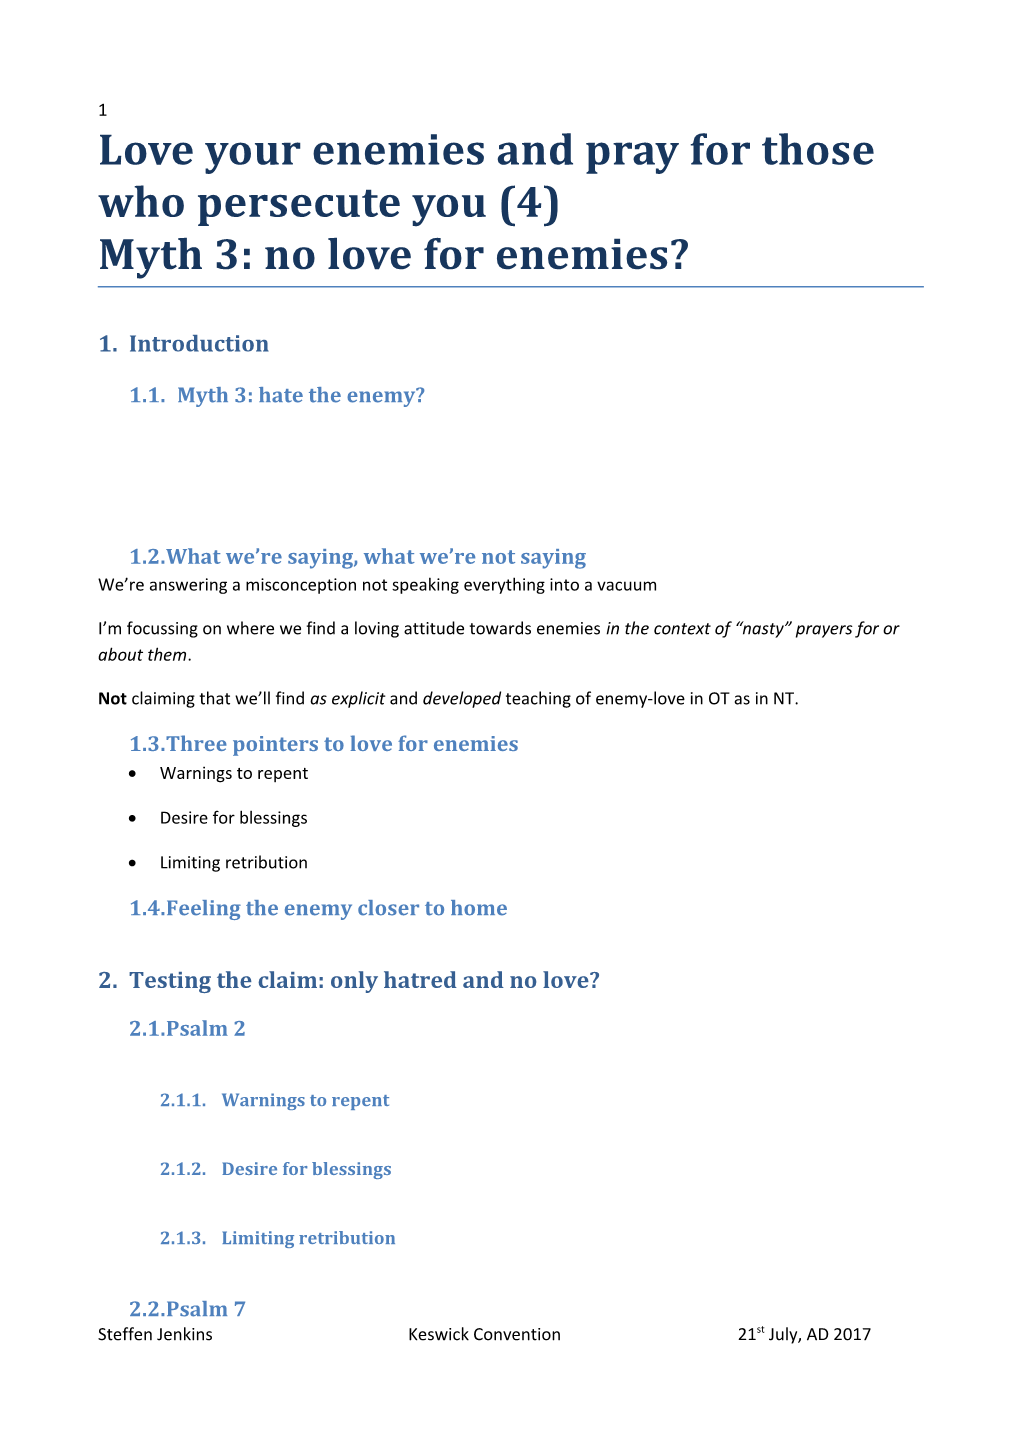 1.1. Myth 3: Hate the Enemy?